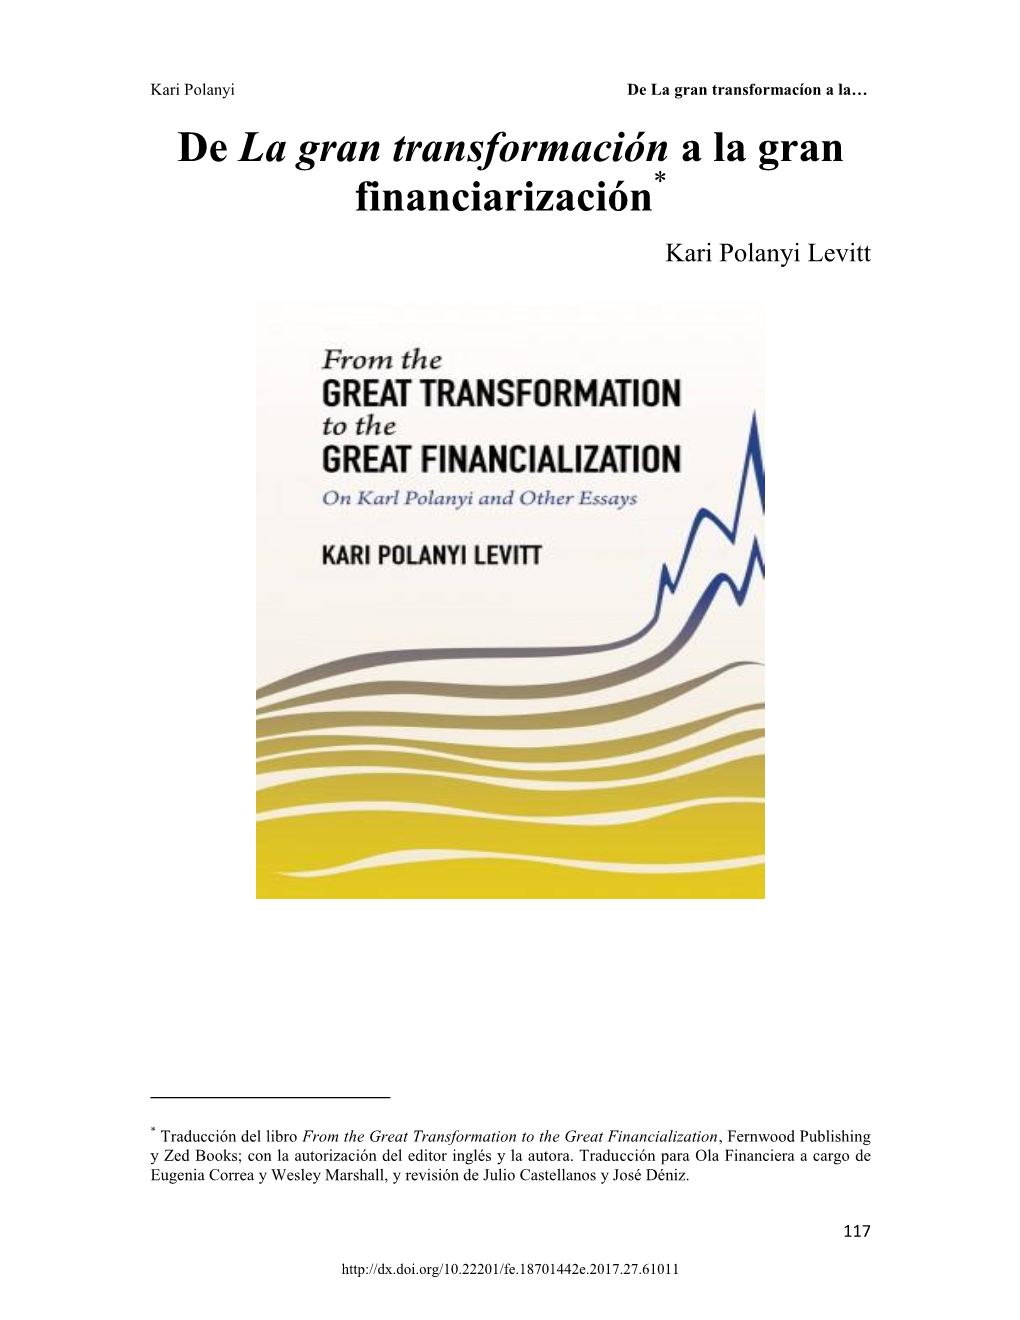 De La Gran Transformación a La Gran Financiarización* Kari Polanyi Levitt